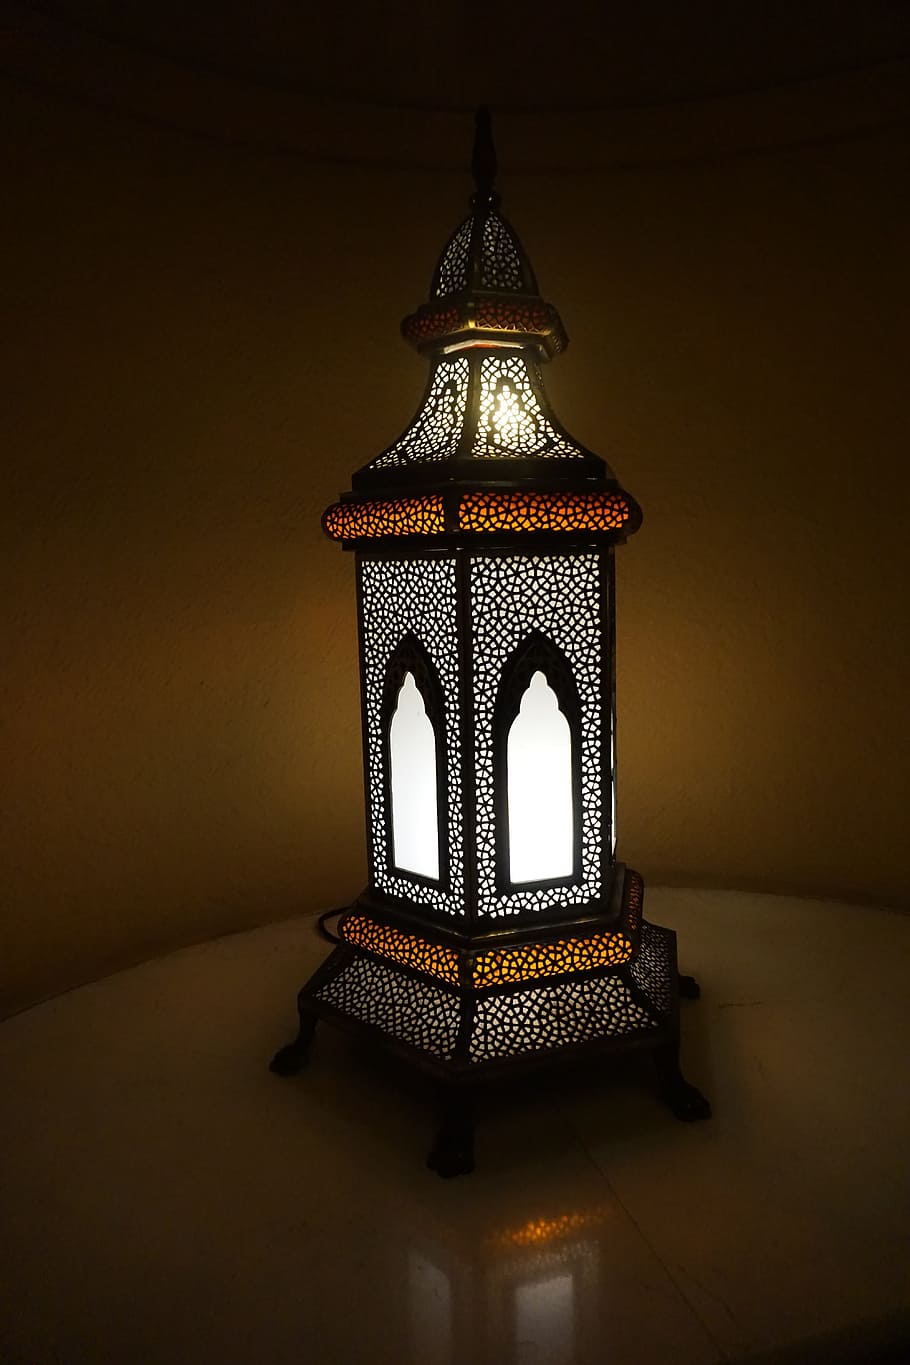 black and yellow lamp on brown wooden surface, Ramadan, Dubai